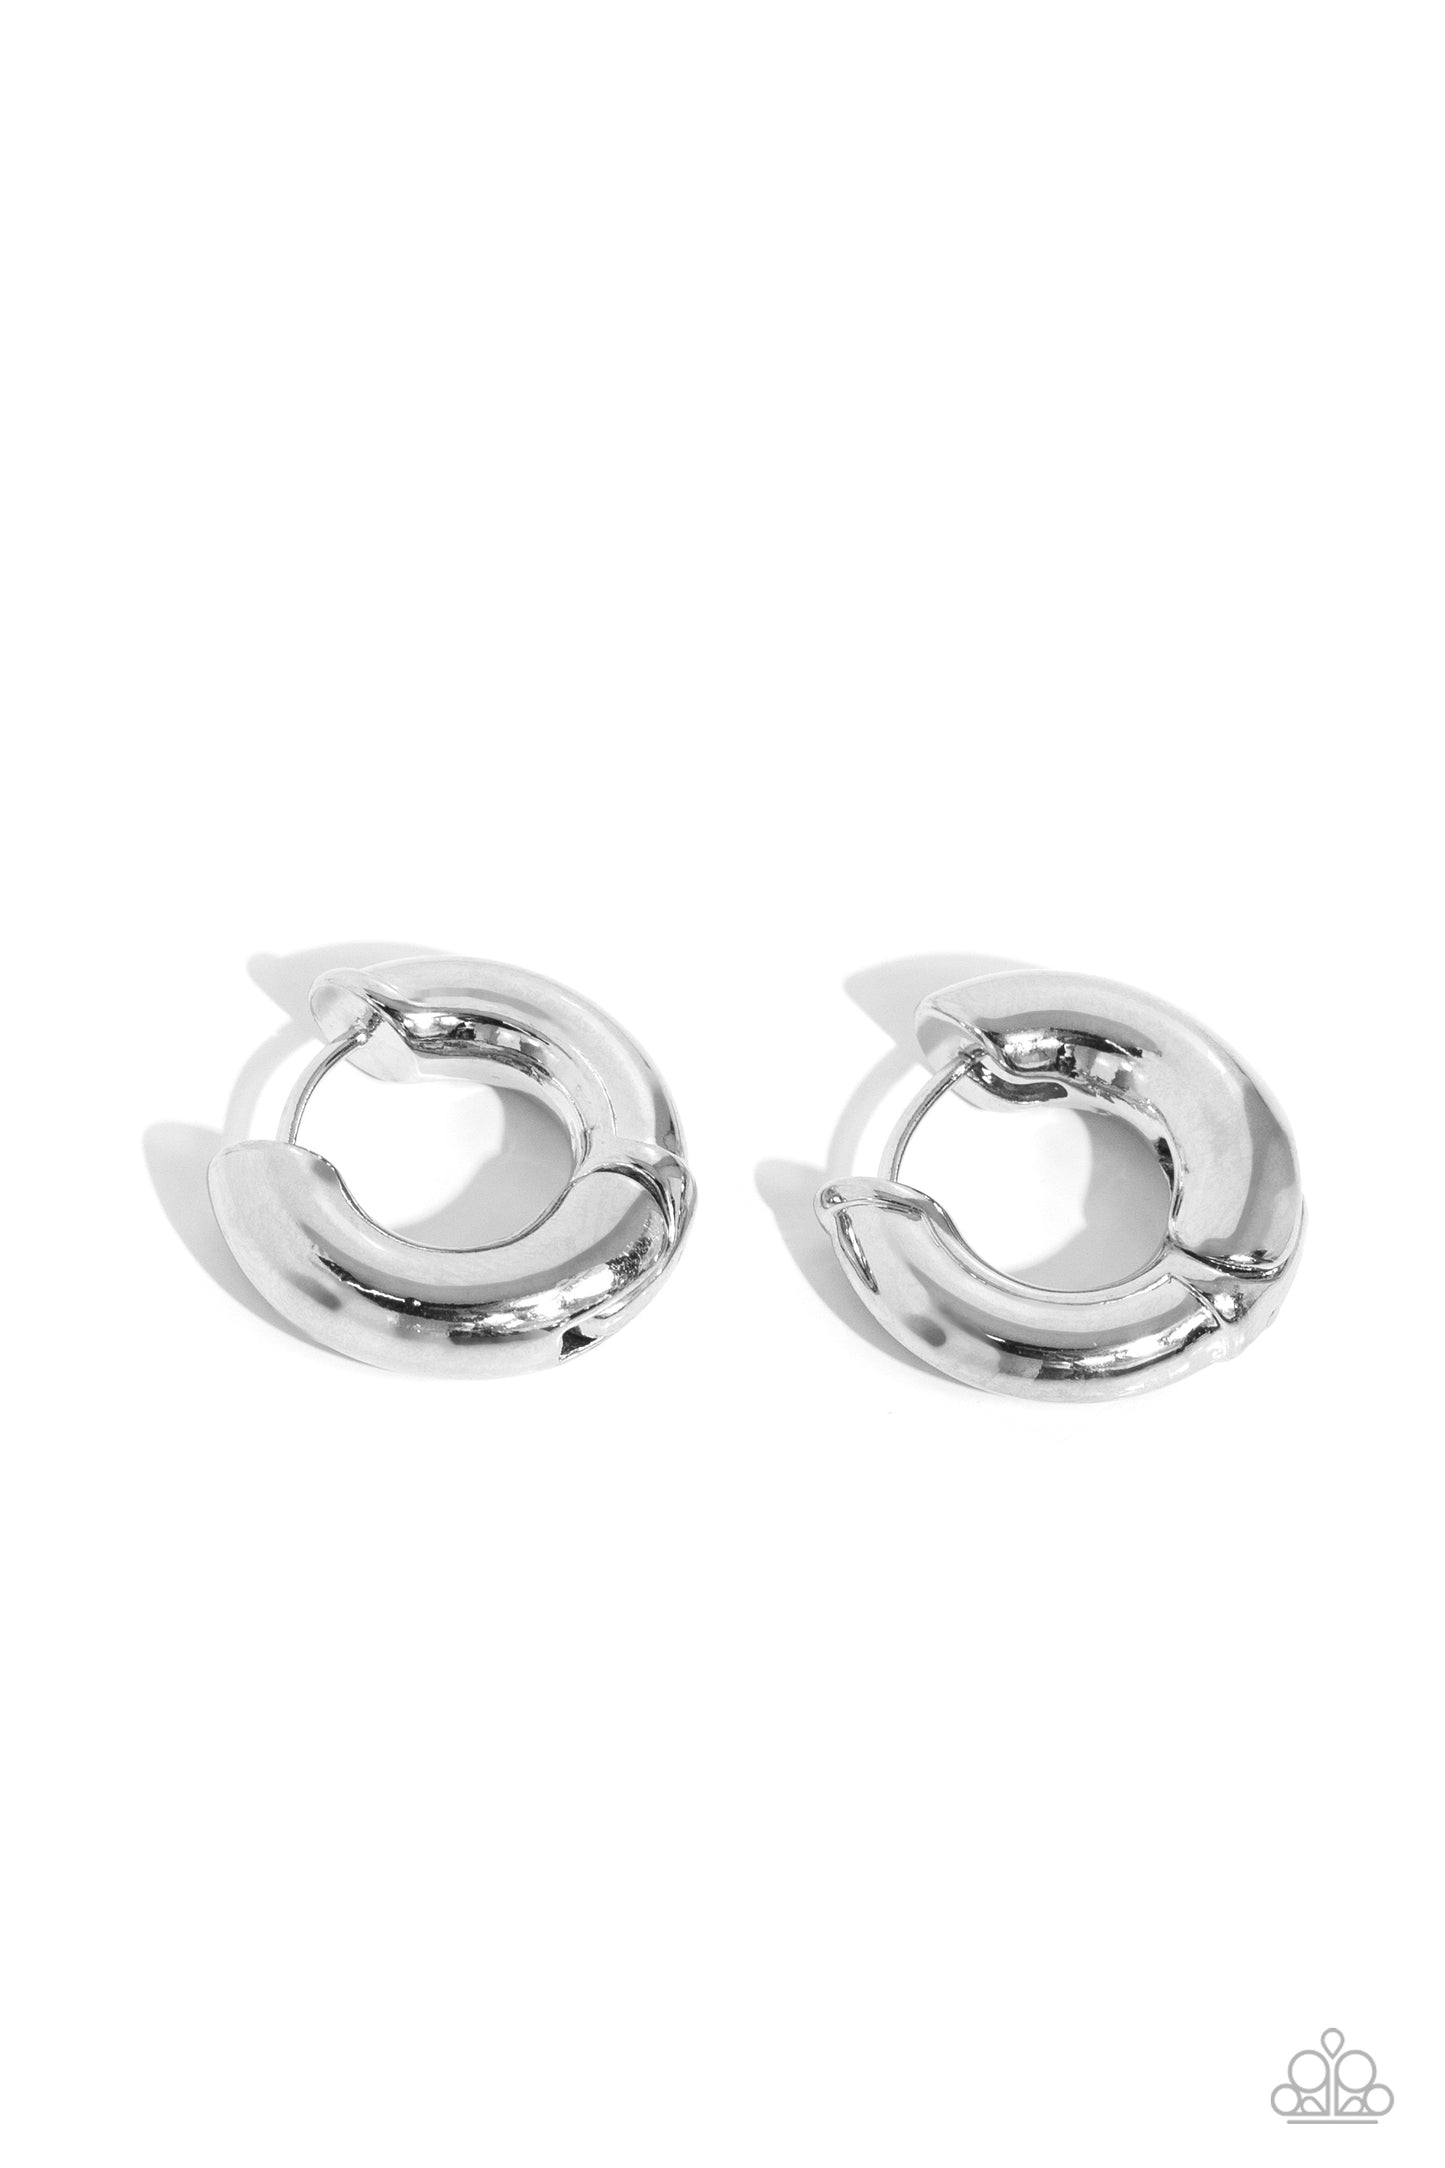 Textured Theme - silver - Paparazzi earrings